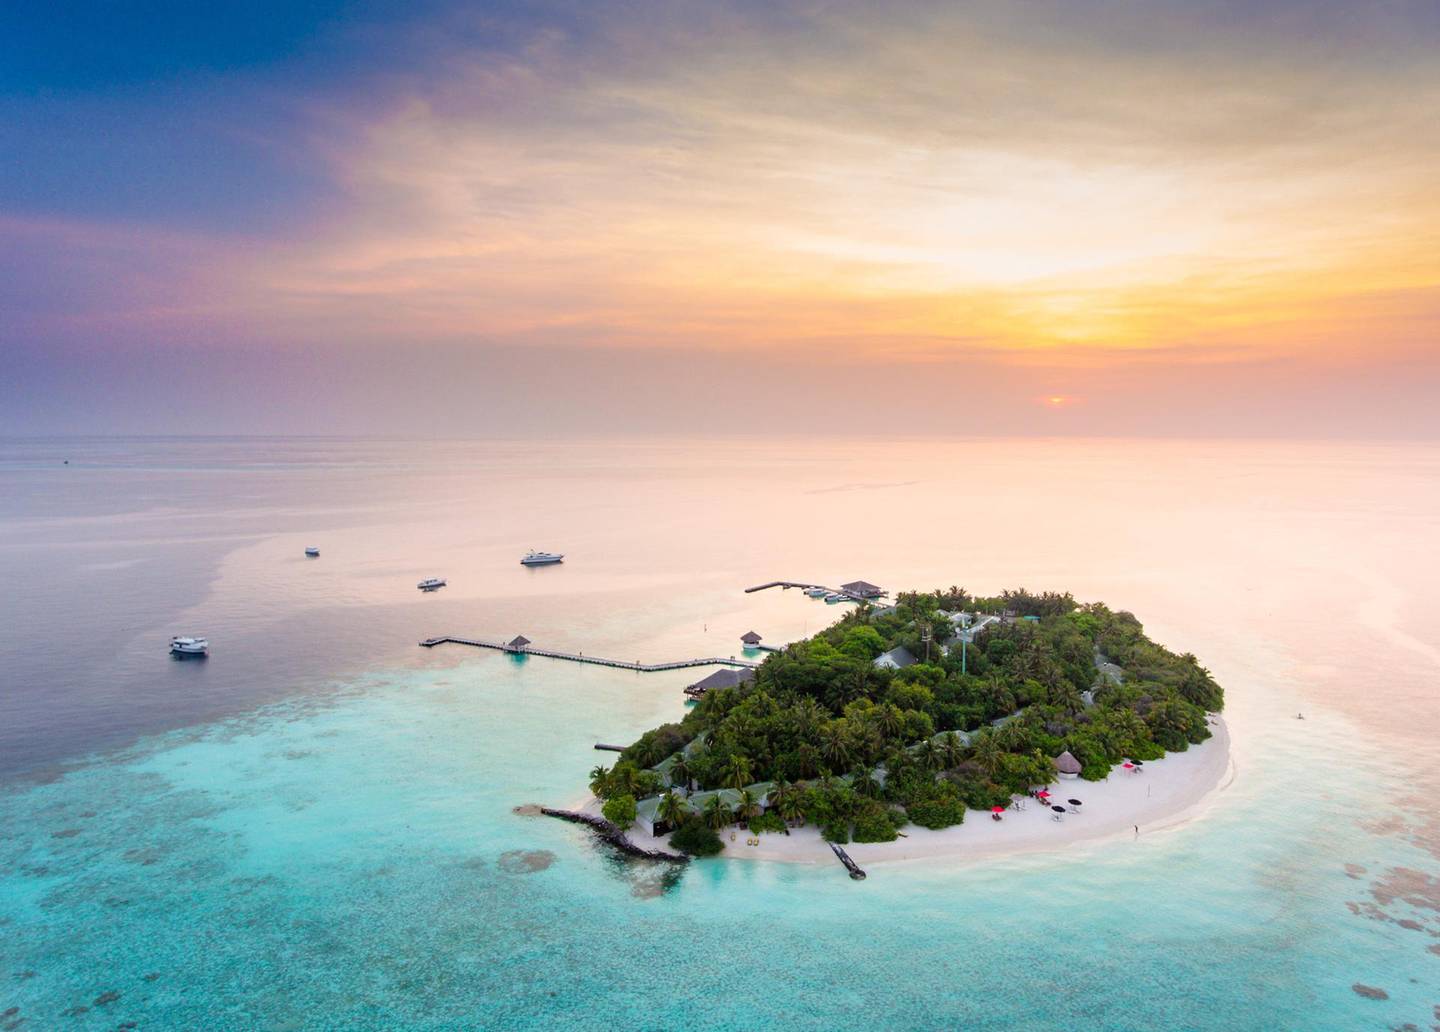 The island of Eriyadu in the northern Maldives. Dnata